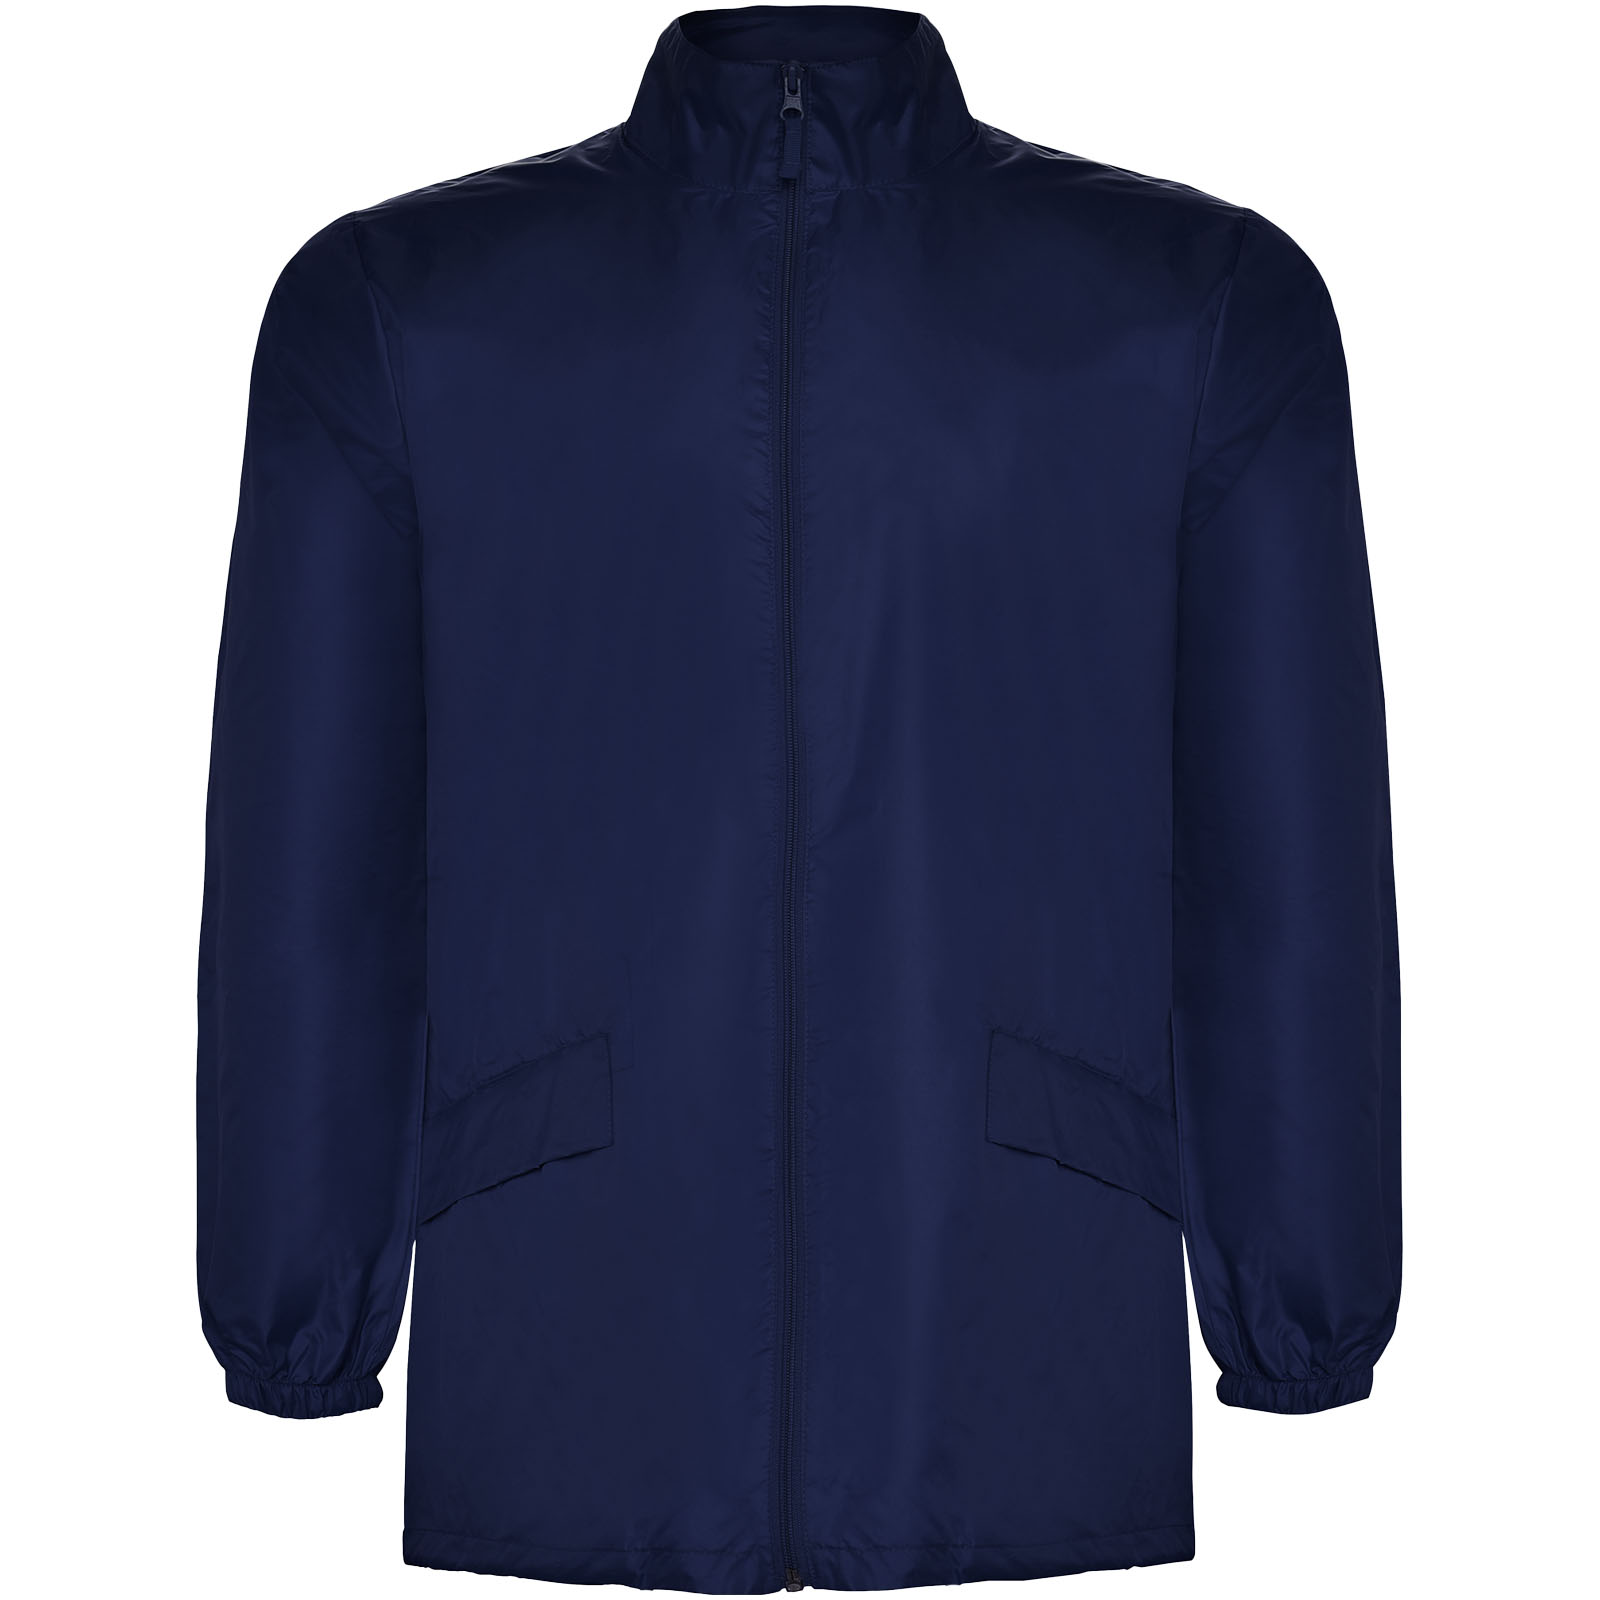 Advertising Jackets - Escocia unisex lightweight rain jacket